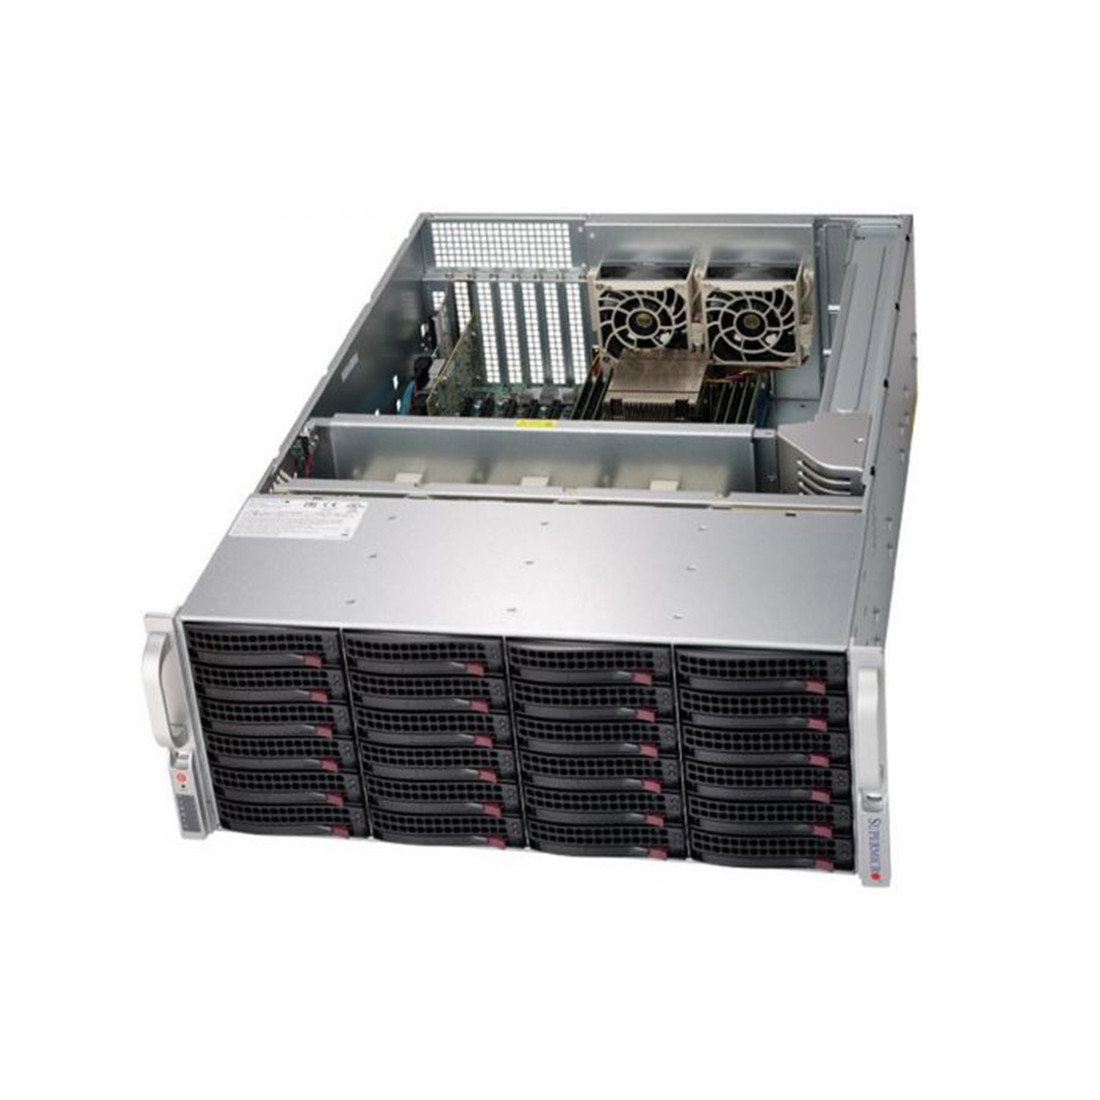 Серверная платформа SUPERMICRO SSG-6049P-E1CR24H: Мощный сервер с 24 дисками для хранения данных